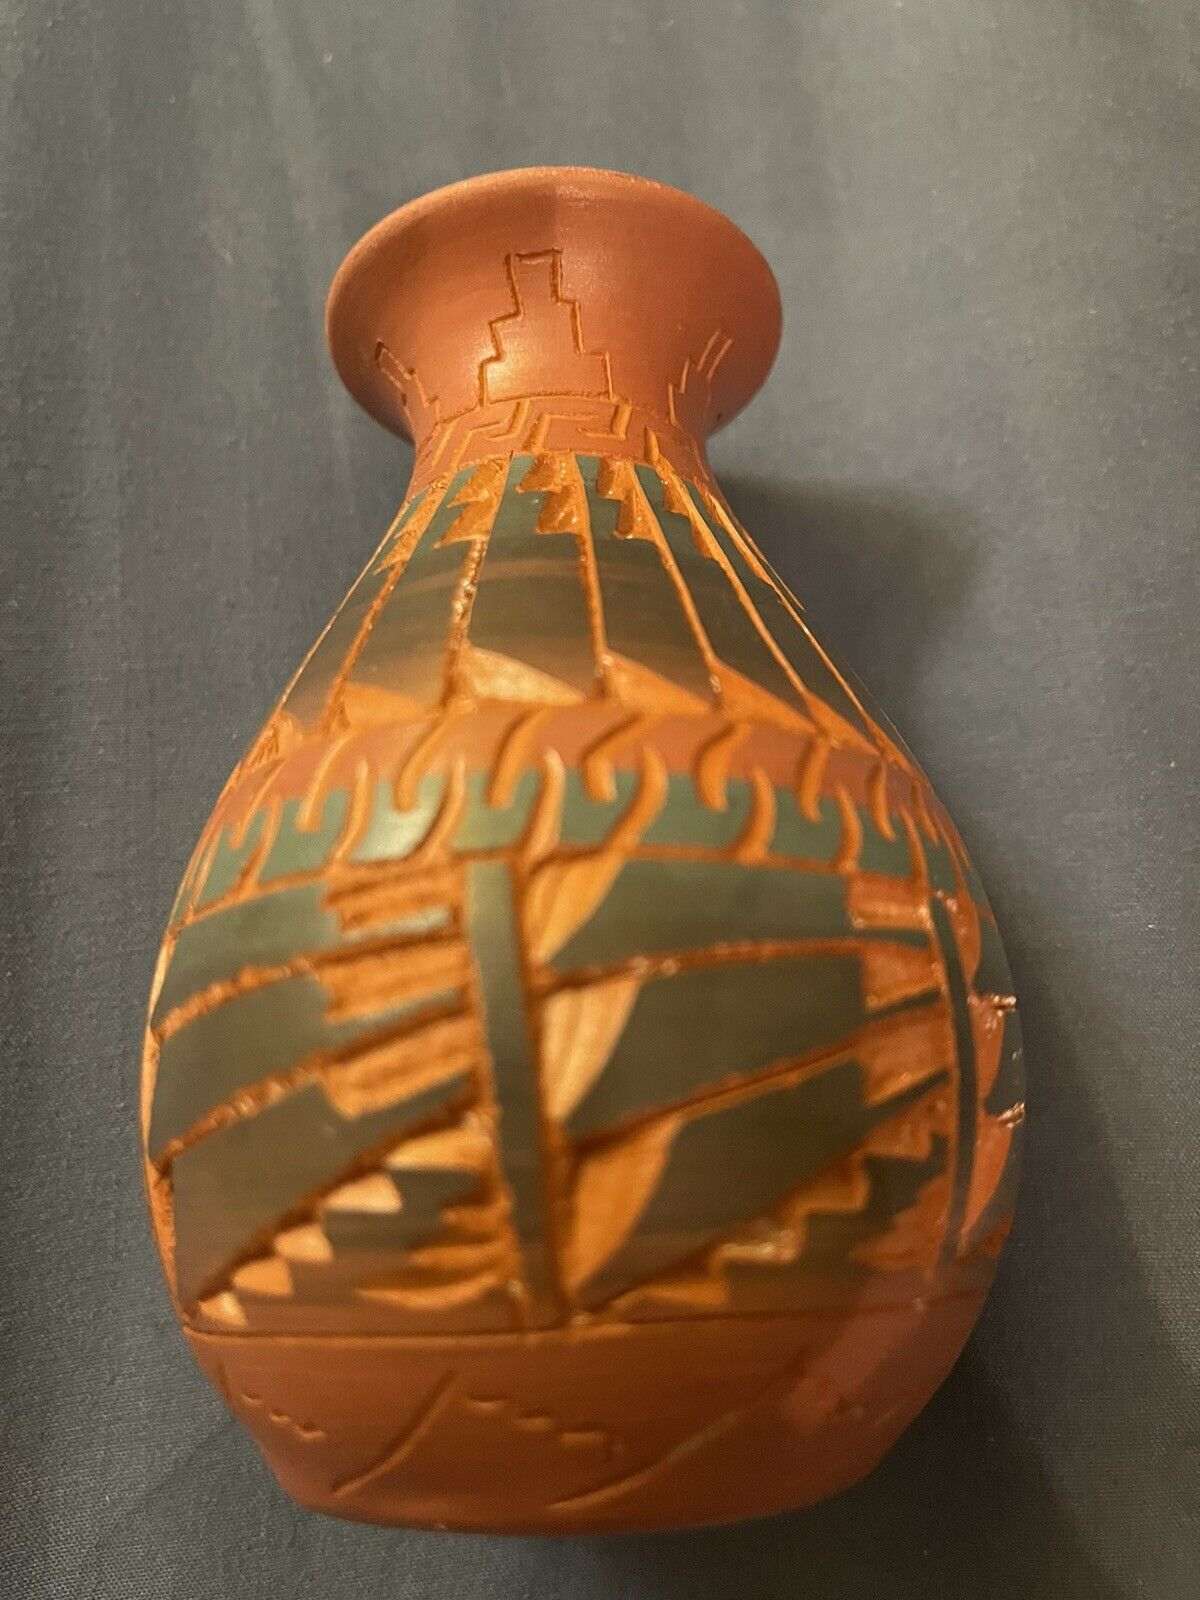 Small Handmade Clay Vase with Native American Symbols 4” Tall-signed J S Navajo